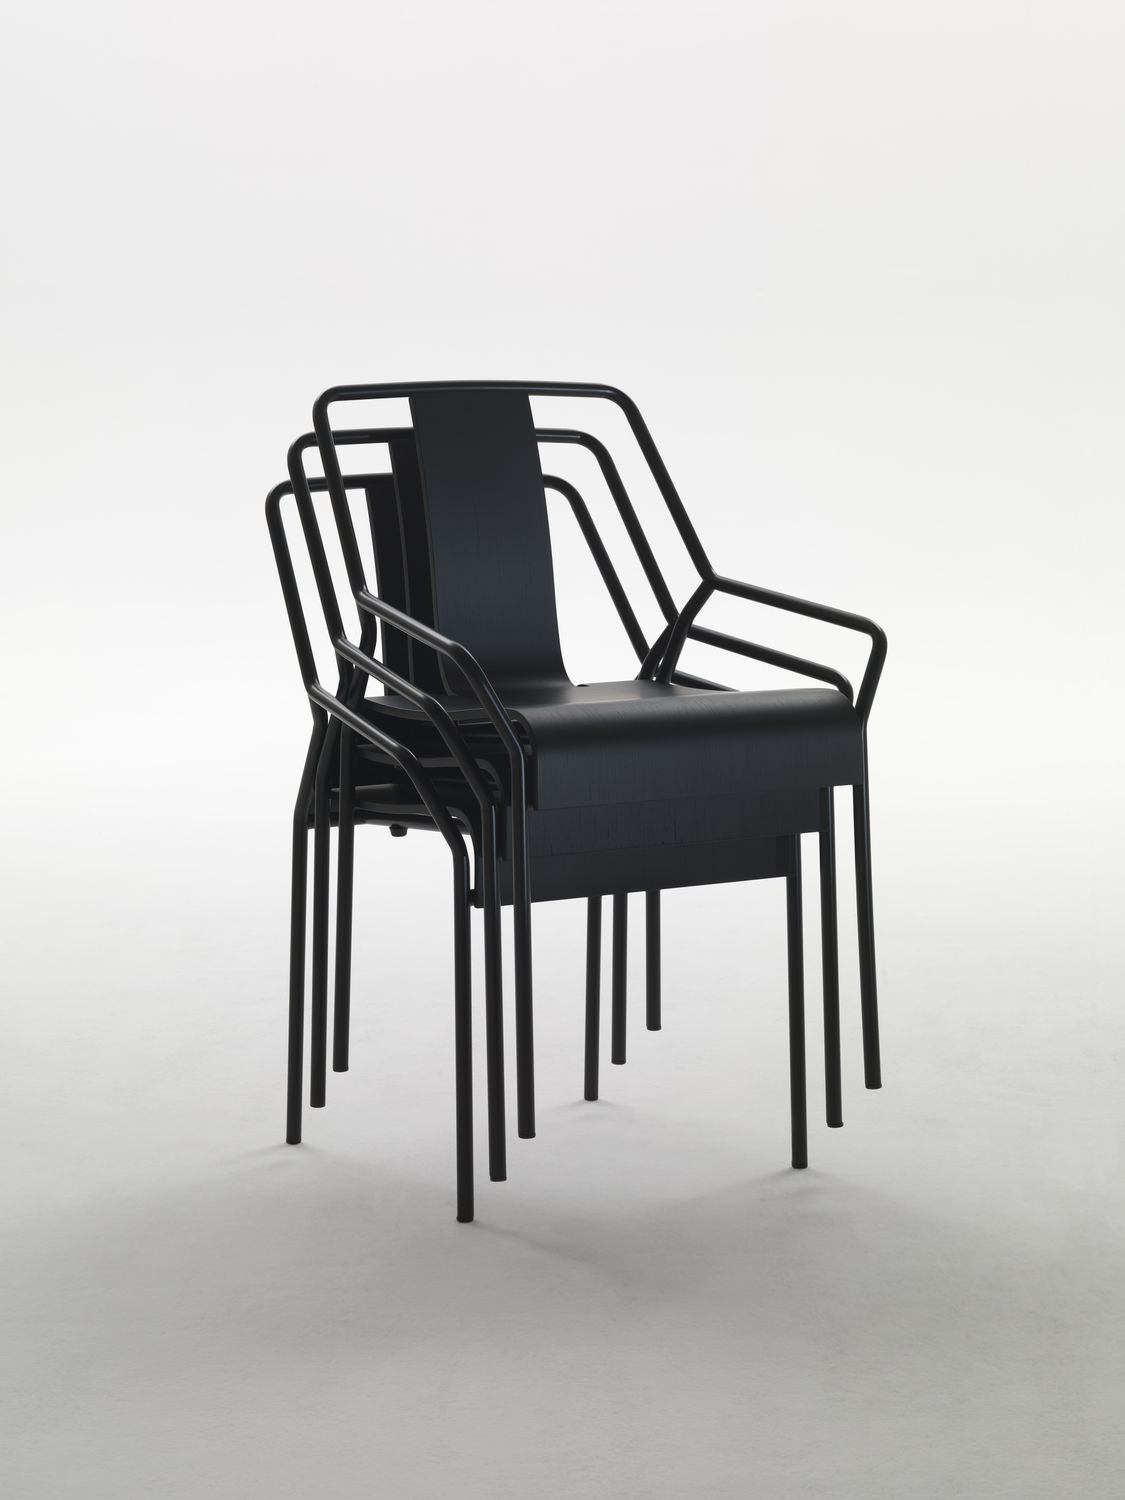 Dao Chairs by Shin Azumi